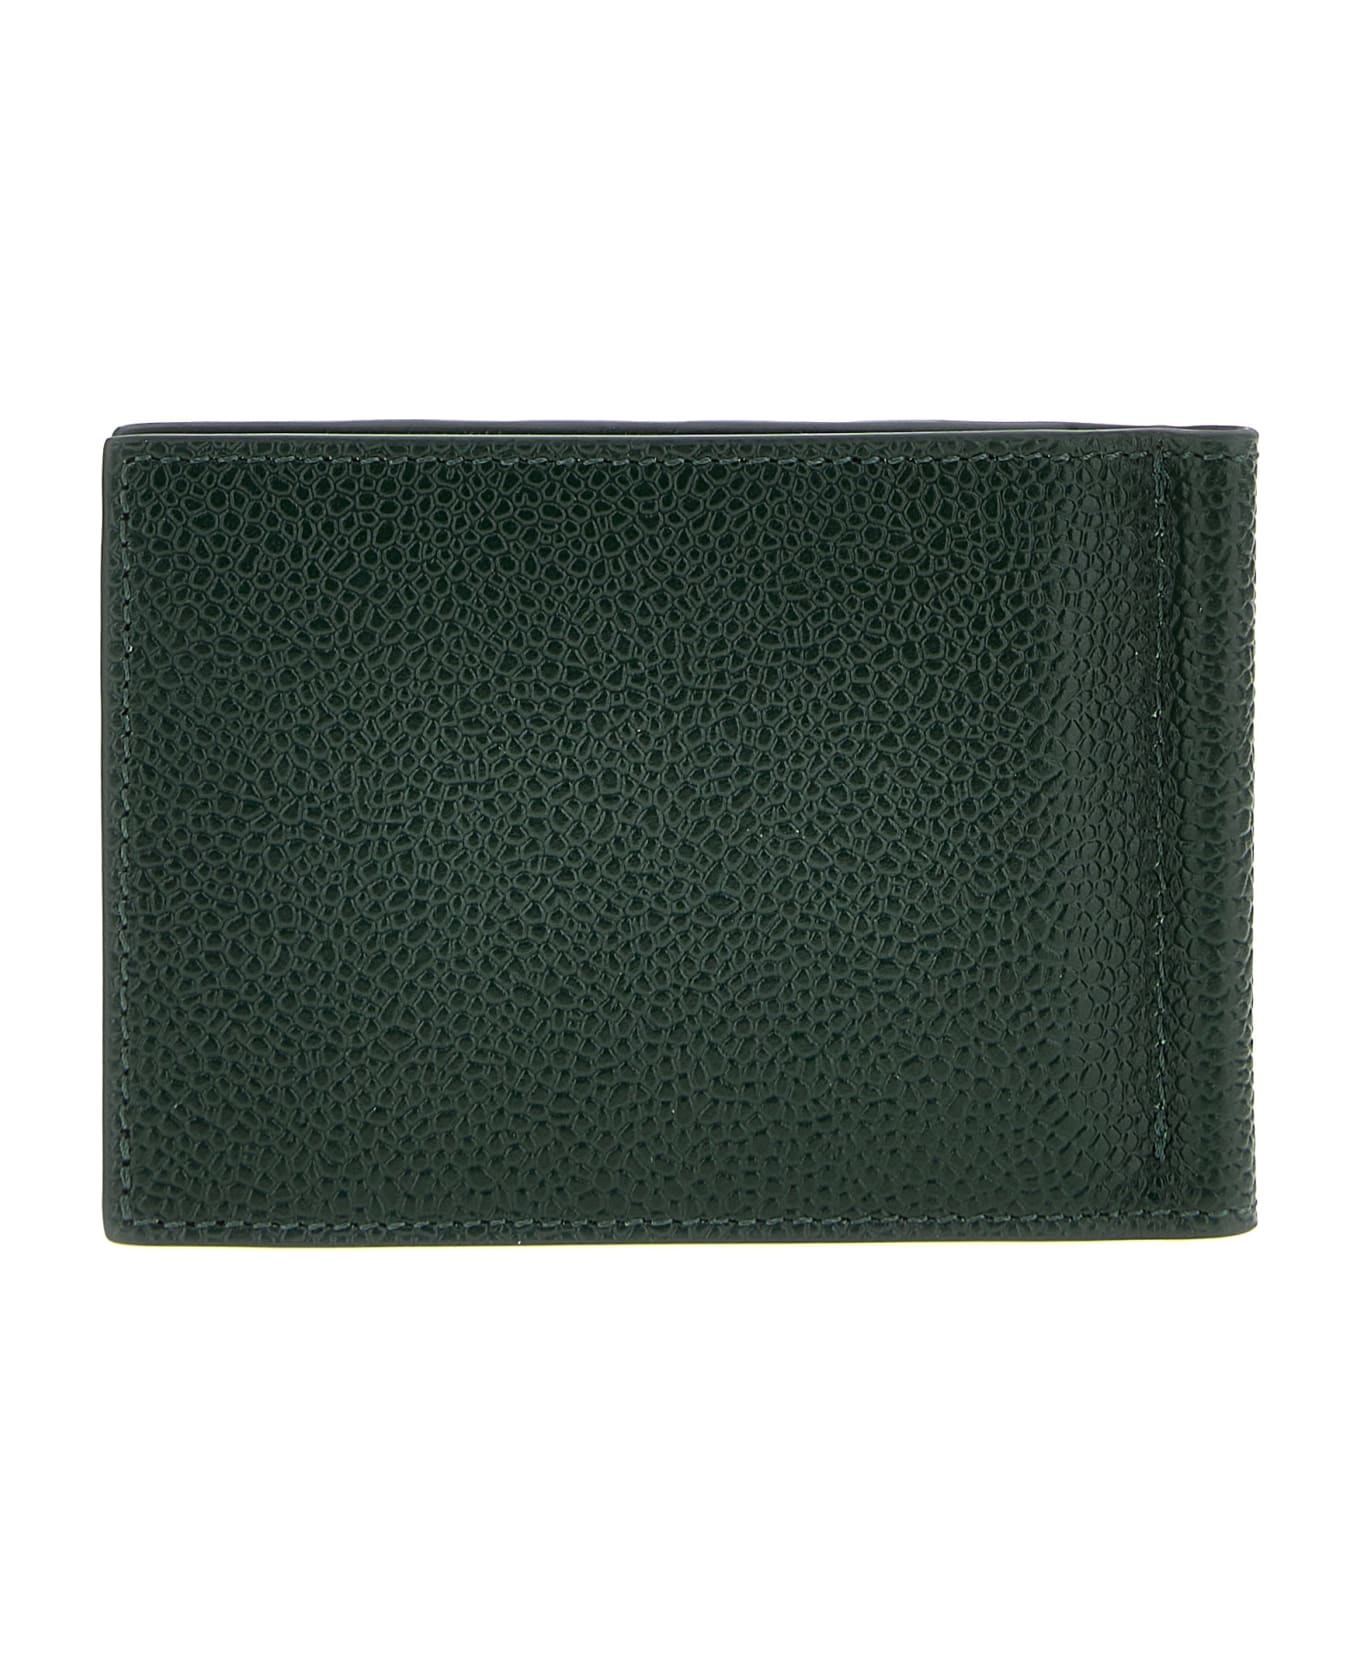 Thom Browne '4 Bar' Wallet - Green 財布